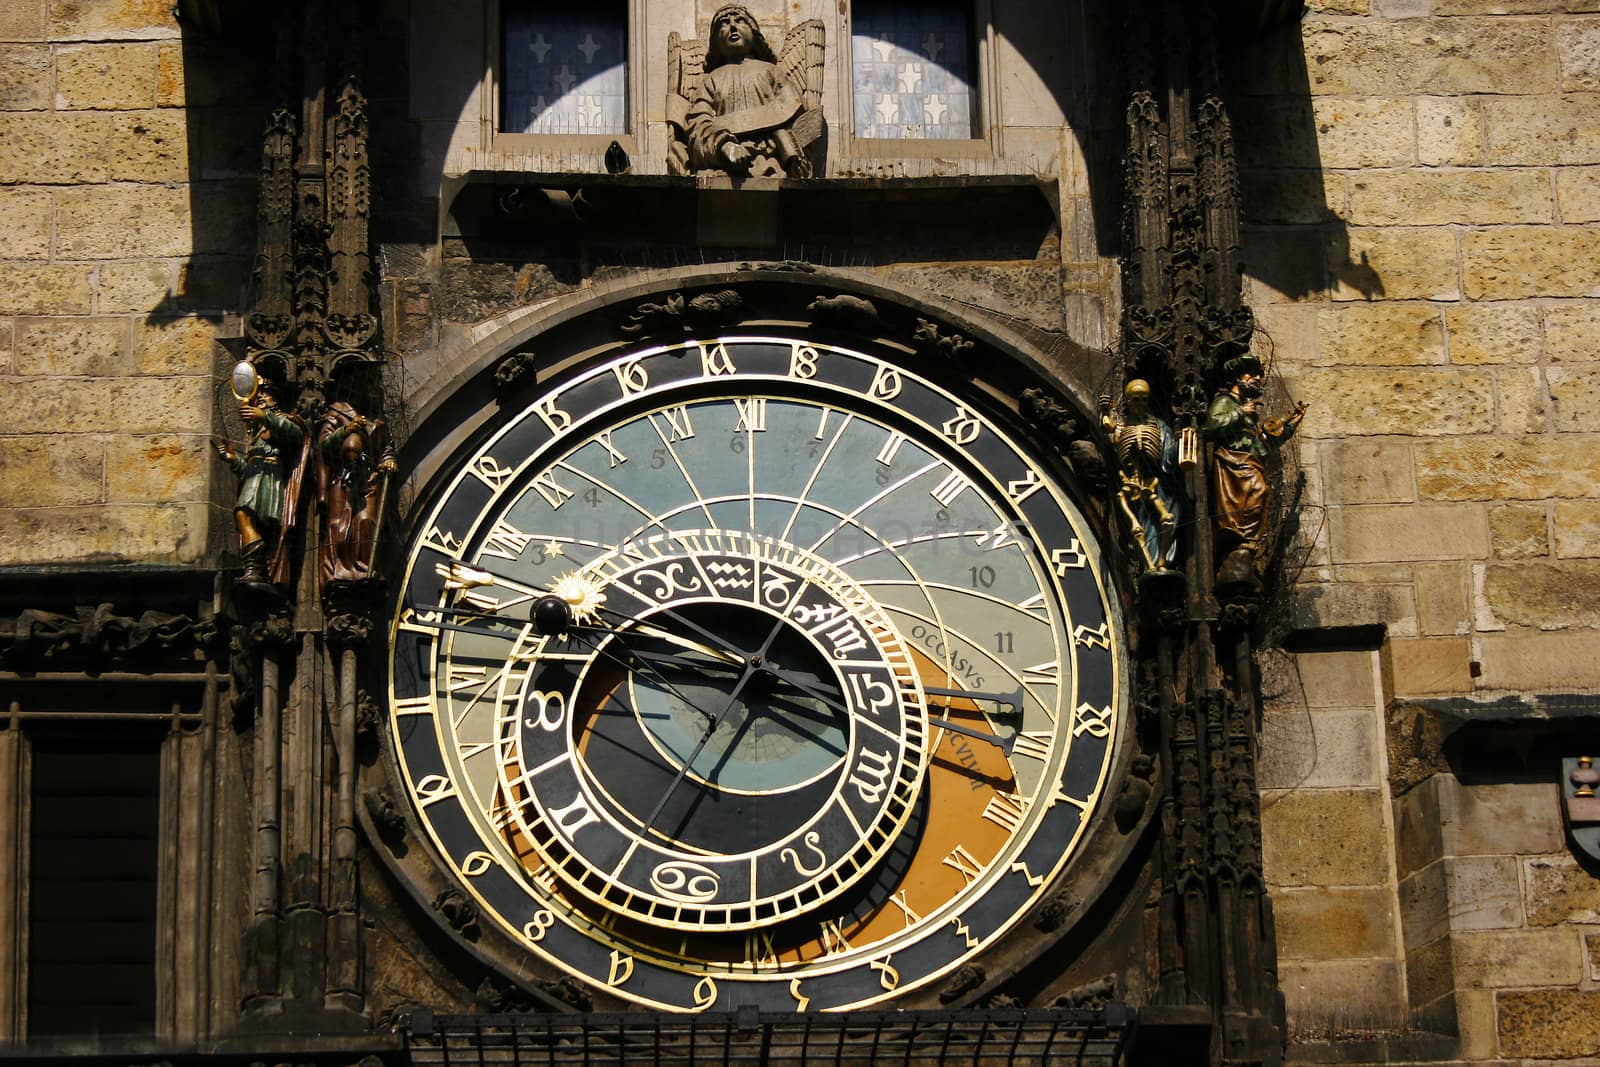 Detail of the astronomical clock from Prague city, Czech Republic